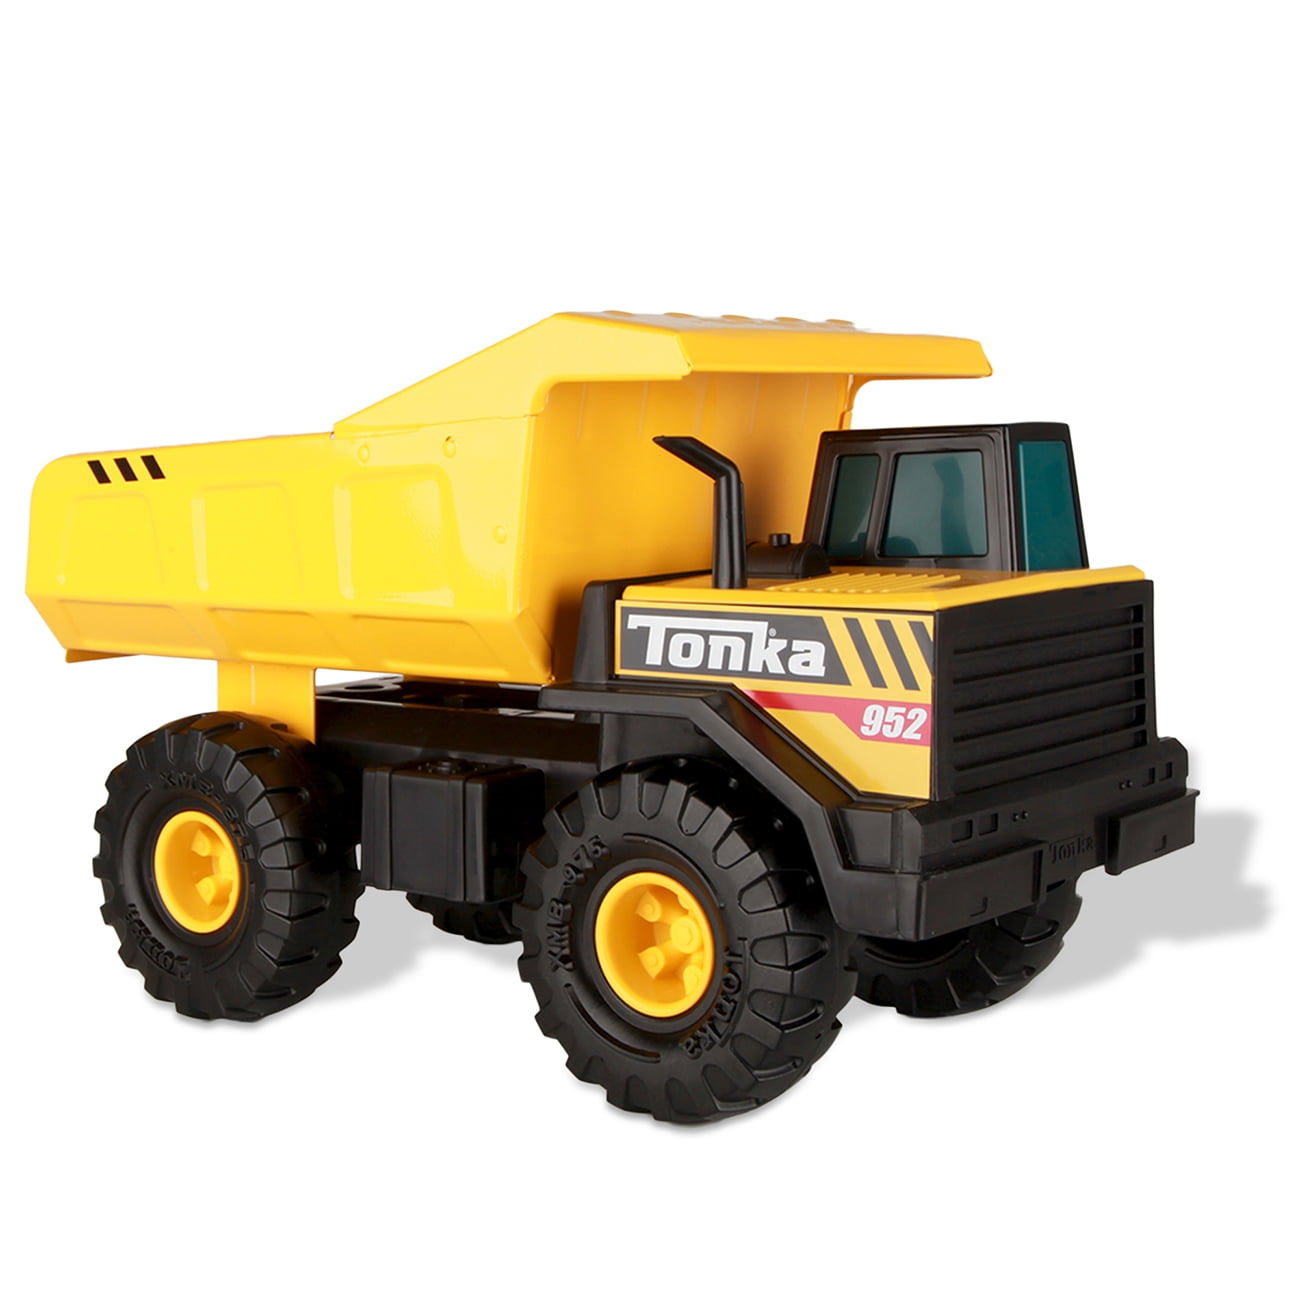 Basic Fun 06028 Tonka Steel Classics Toughest Mighty Dump Truck Yellow for sale online 